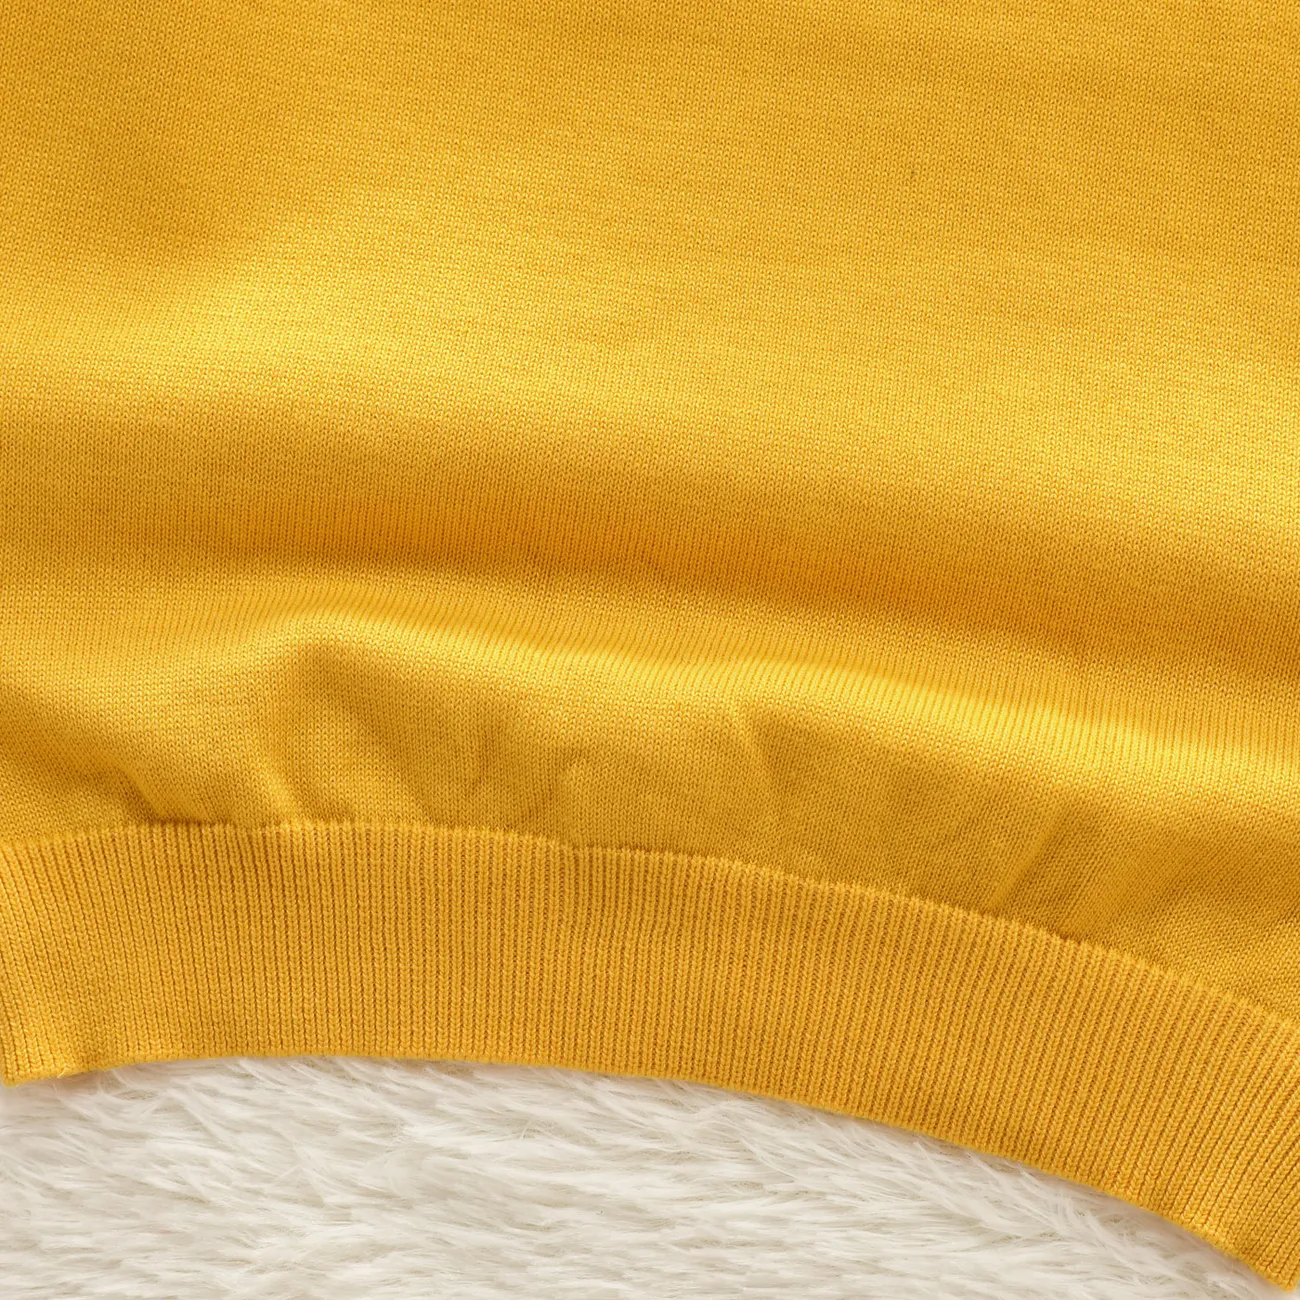 Chicos Unisex Color liso lana Suéter Amarillo big image 1